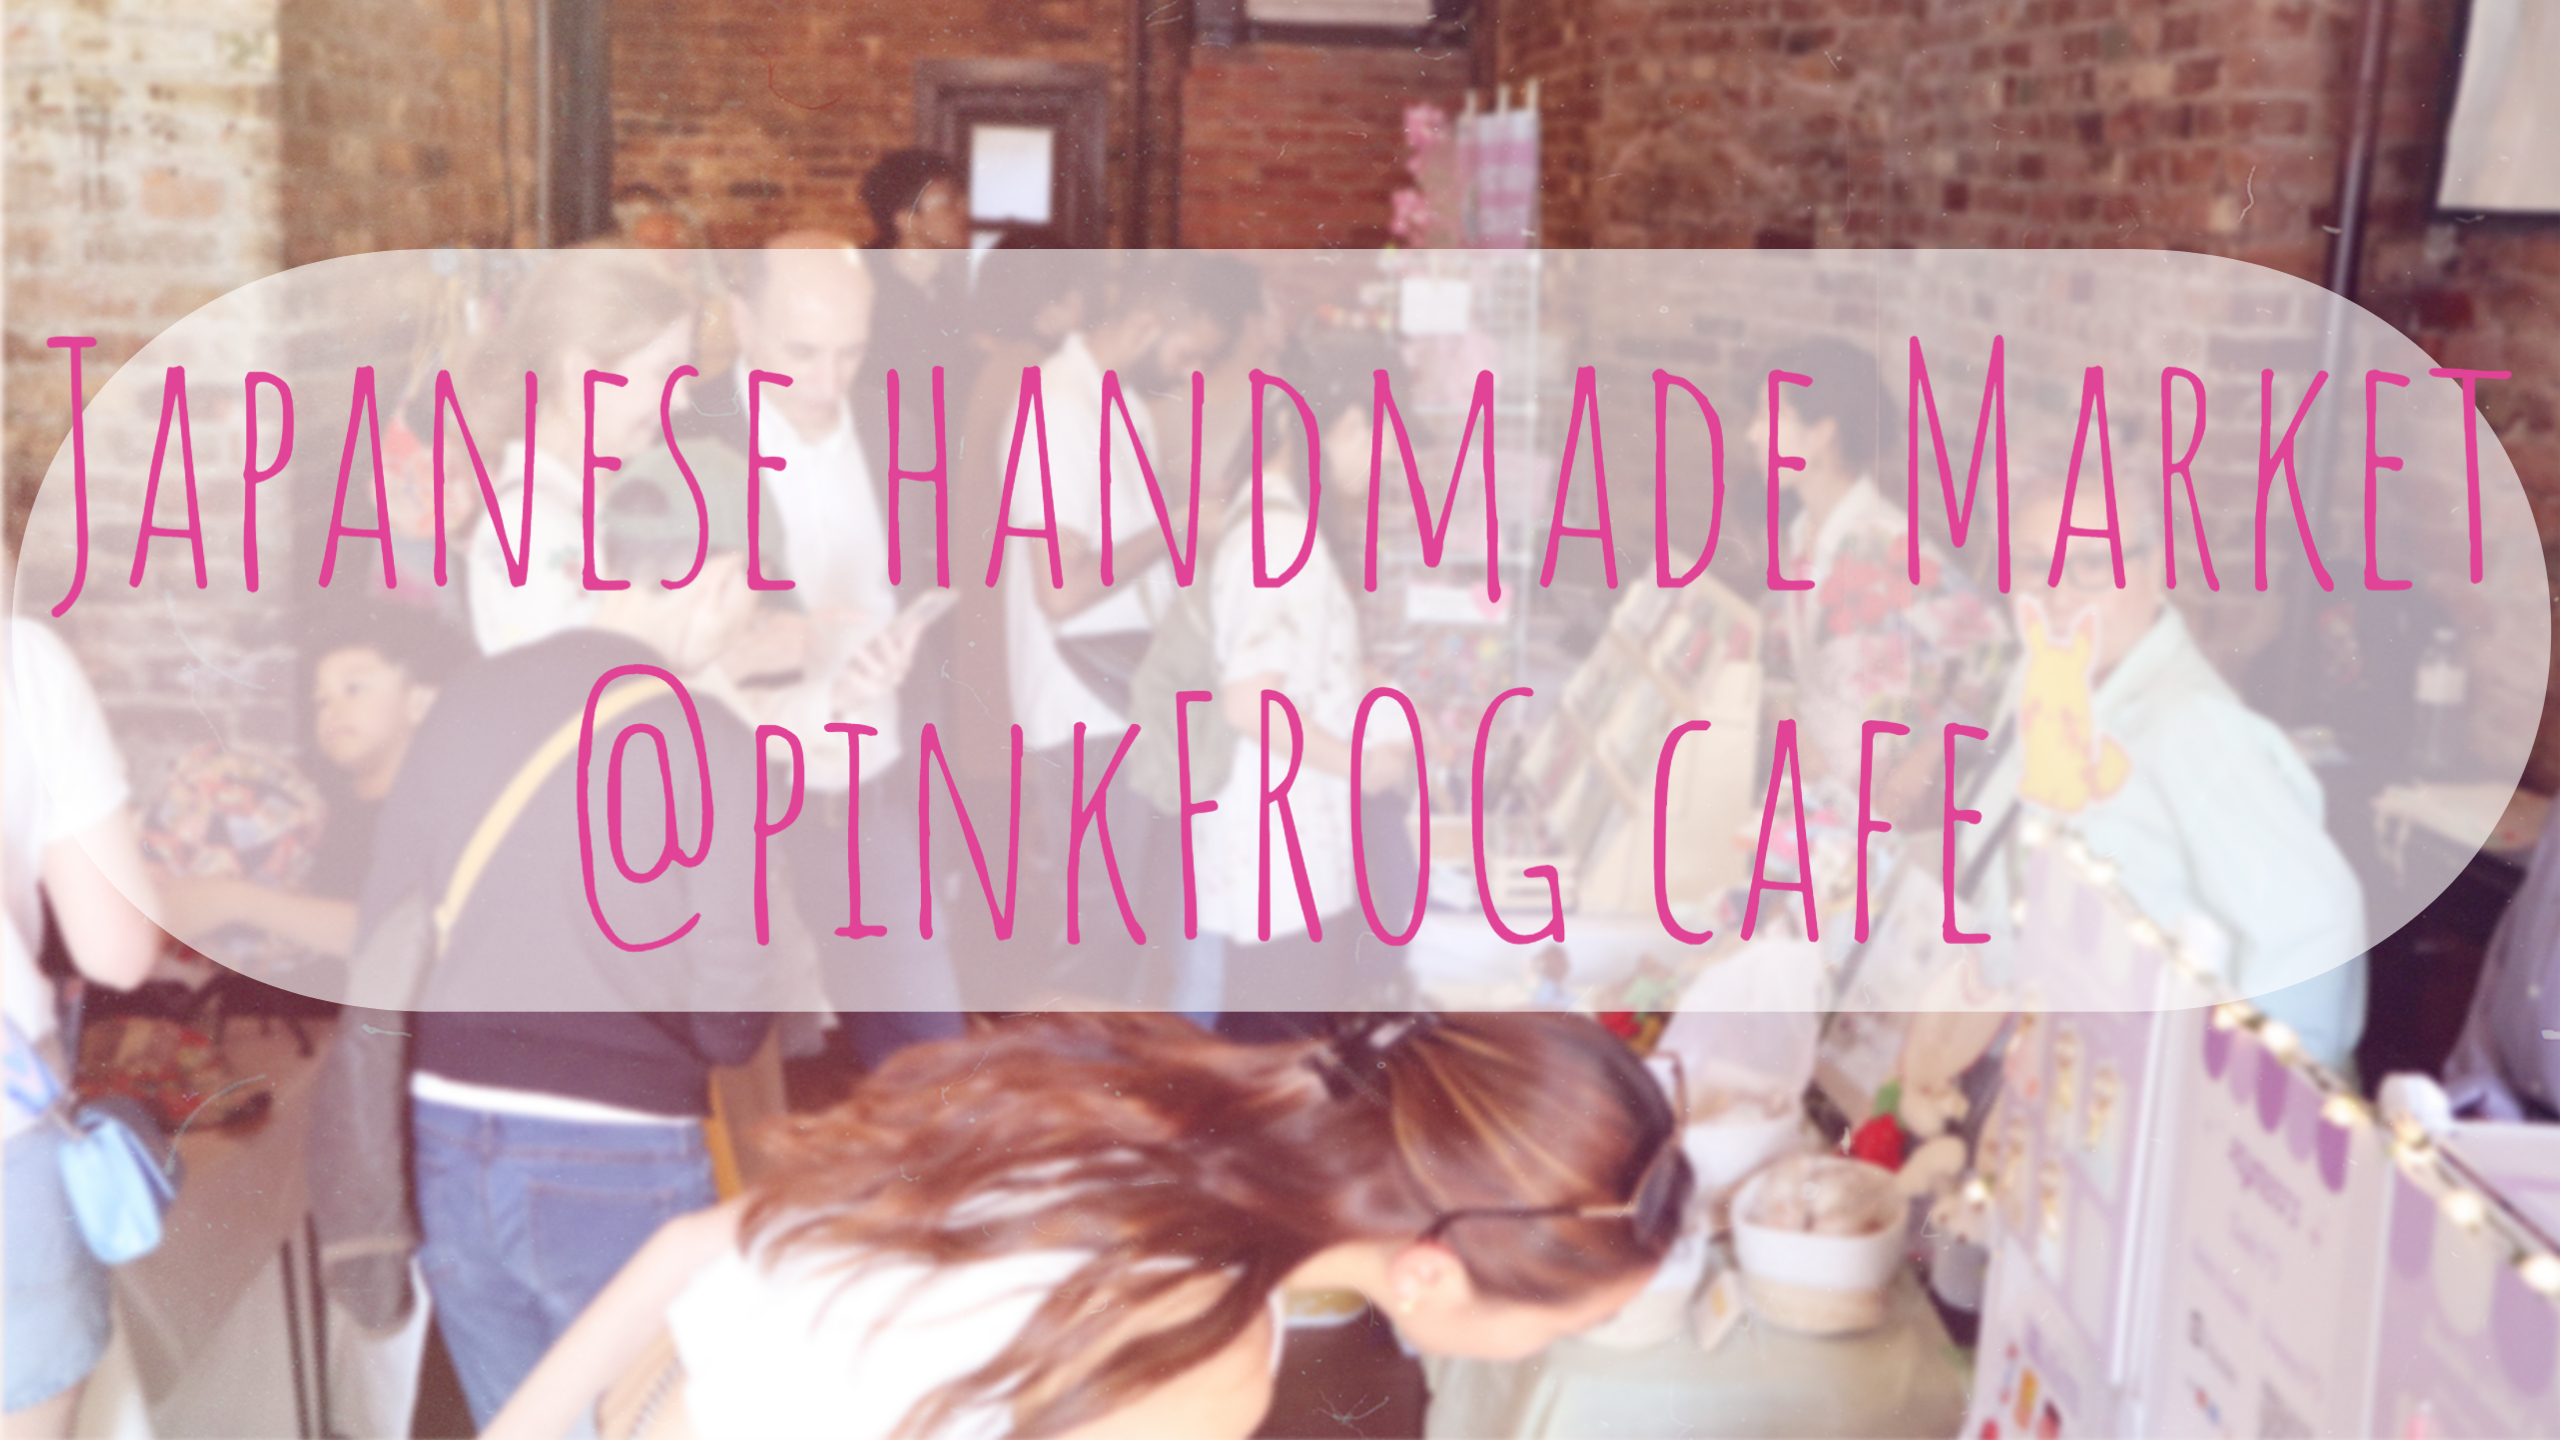 pinkFrog Cafe Japanese handmade Market